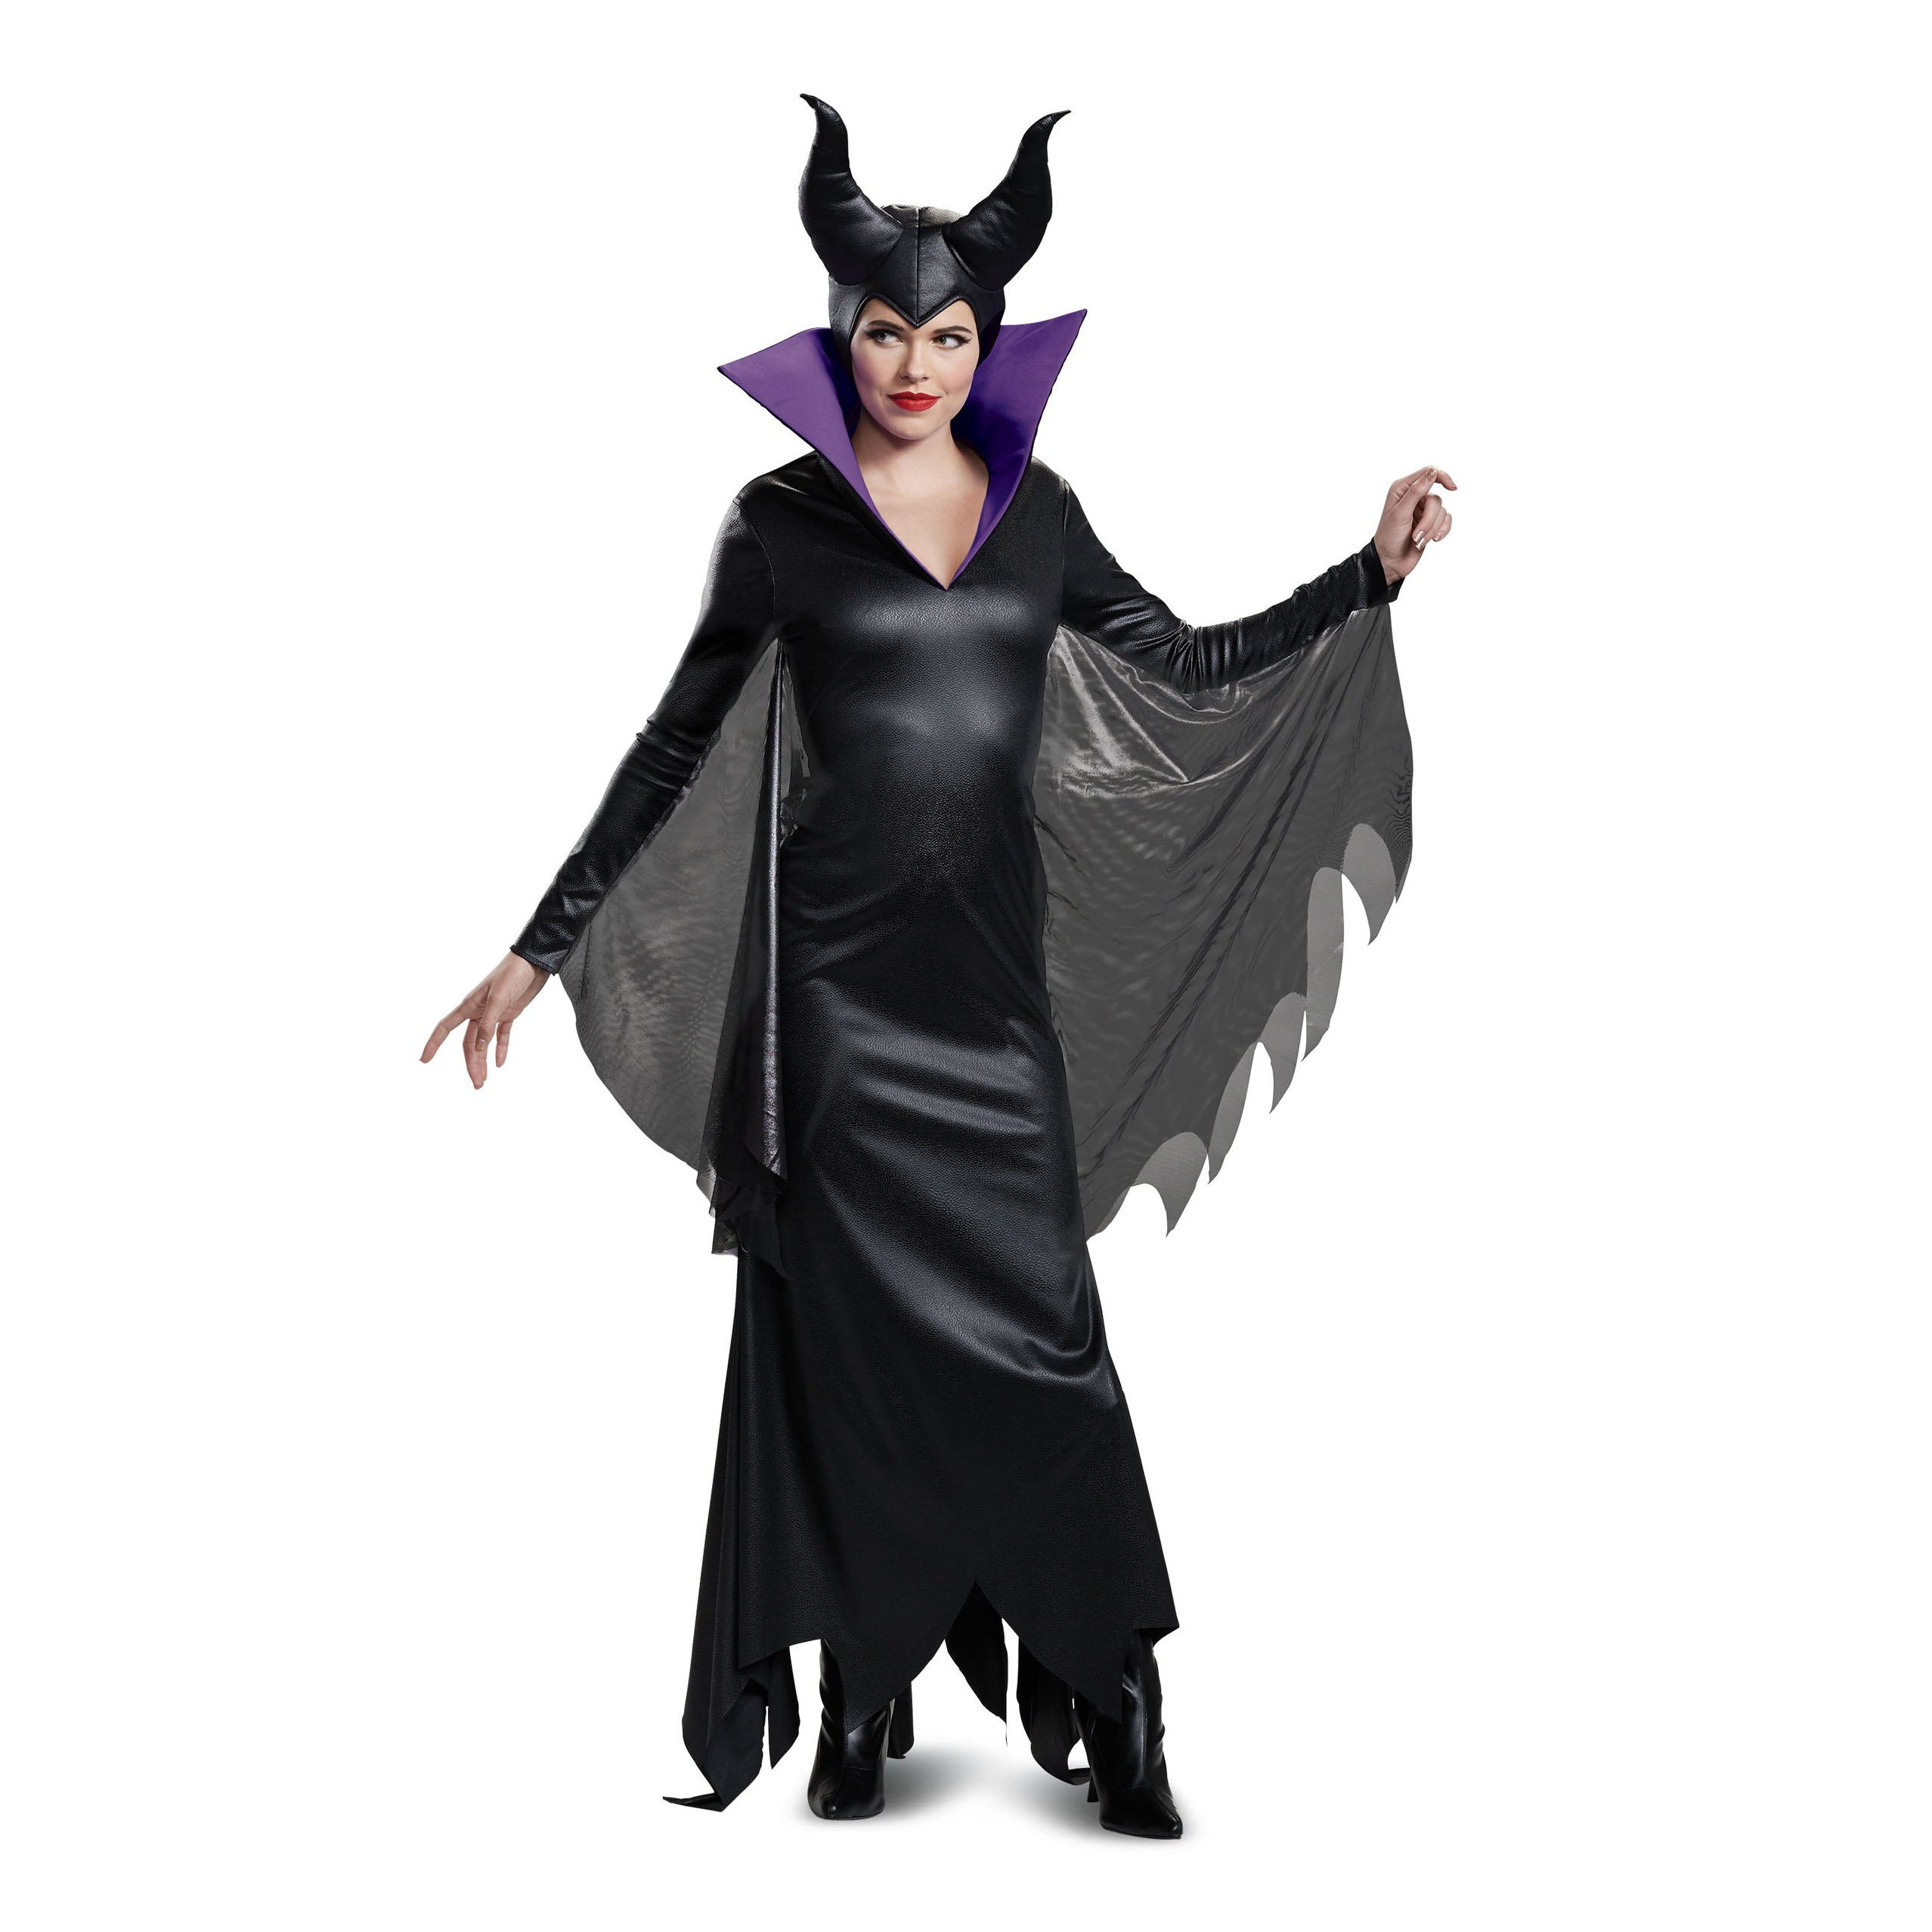 https://delunadisfraces.com/wp-content/uploads/2020/07/67471-deluxe-maleficent-costume.jpg